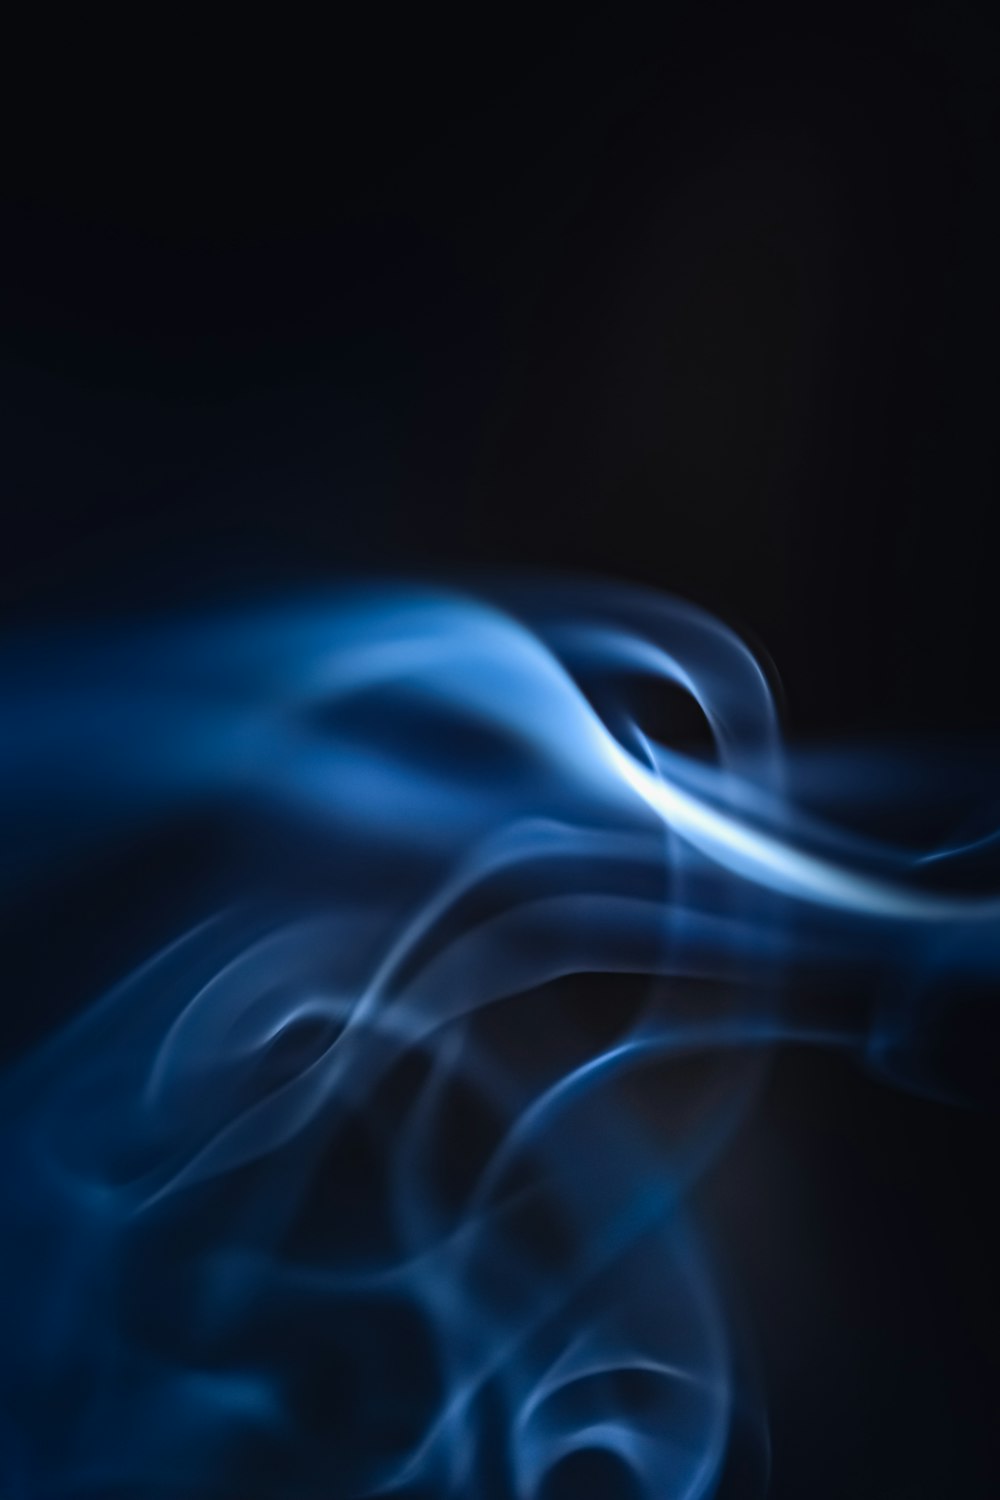 a blue smoke swirl on a black background